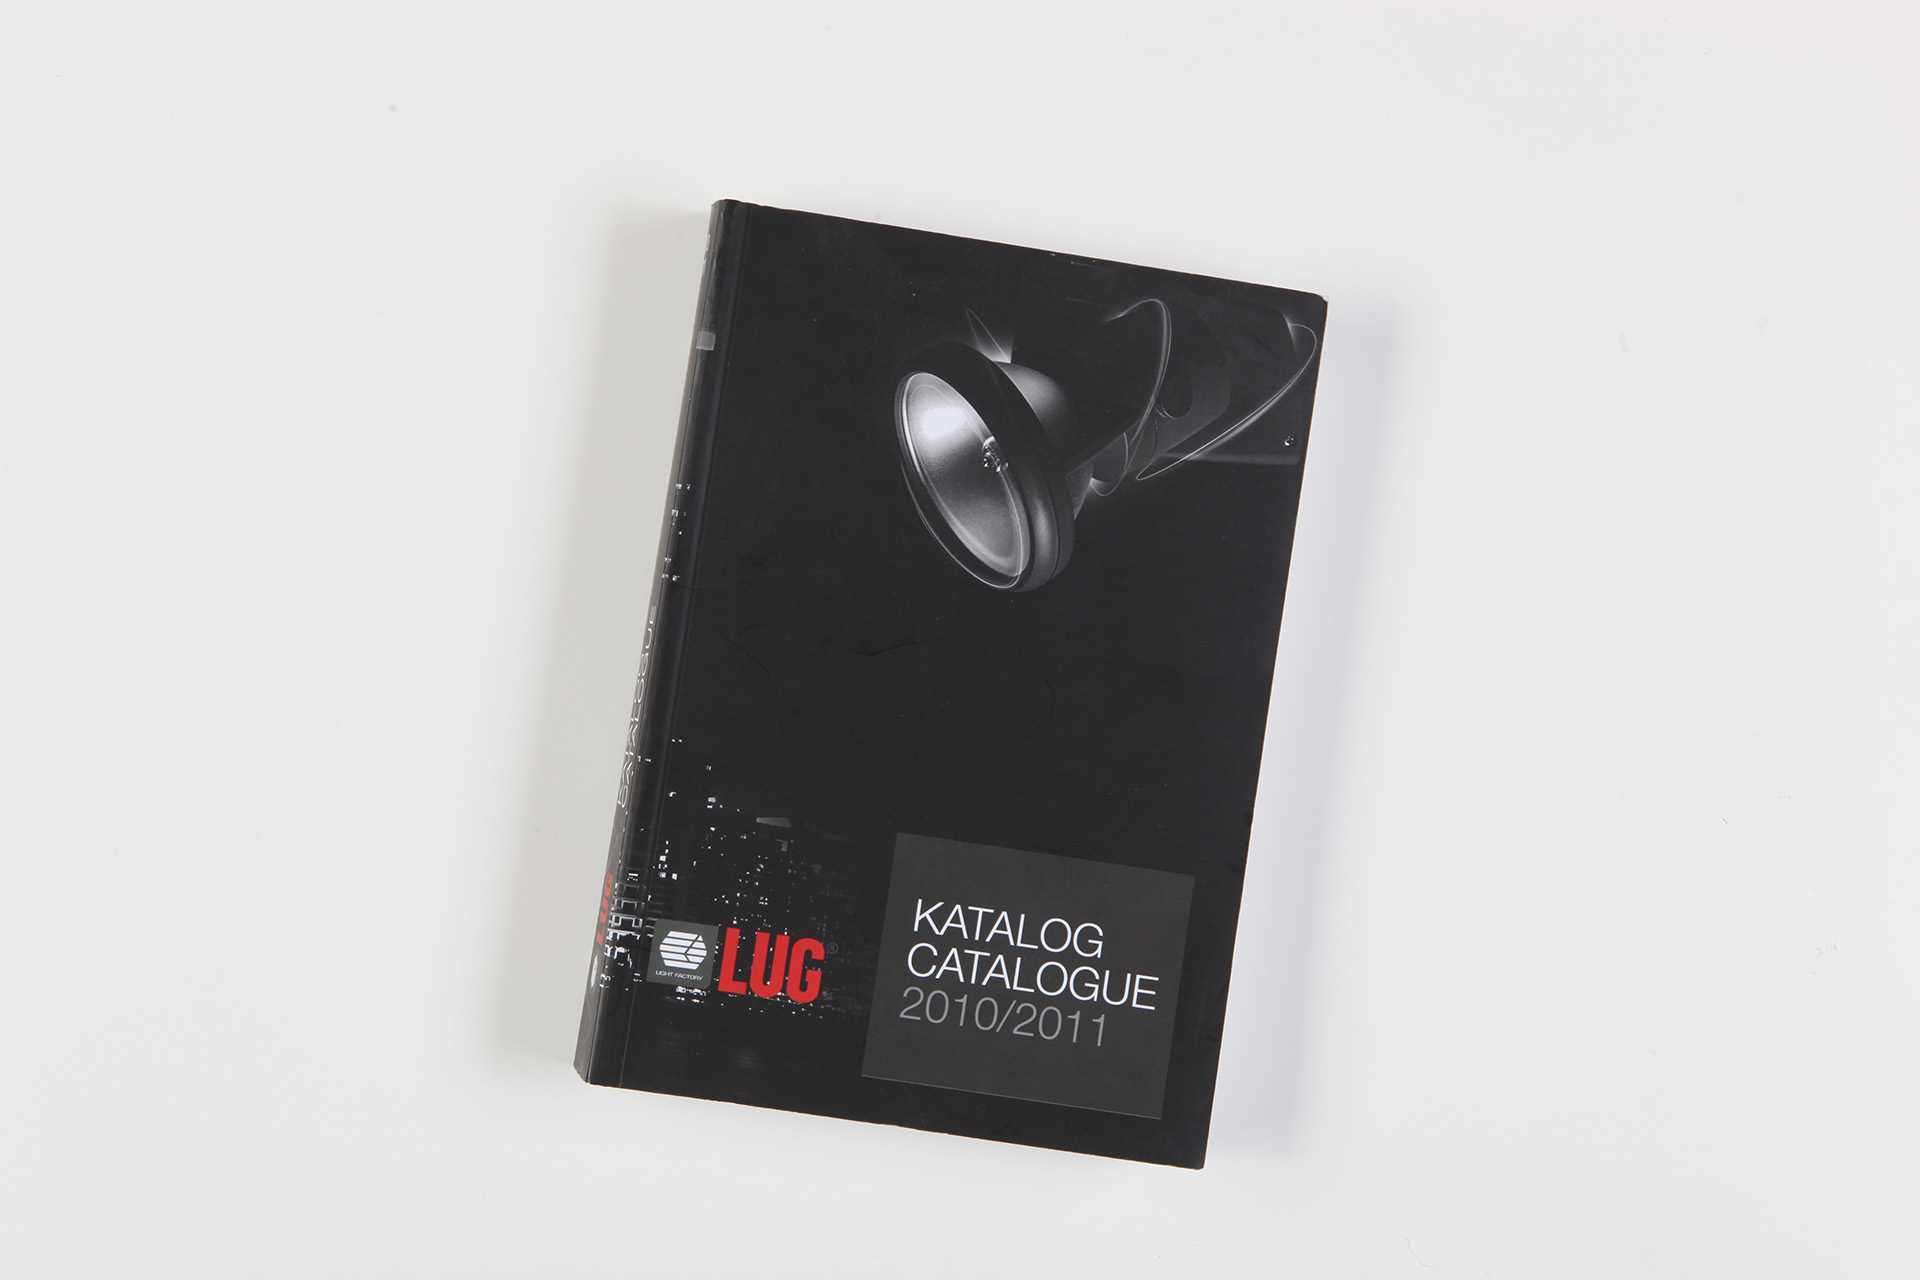 LUG Light, katalog - wydawnictwo, studio DTP